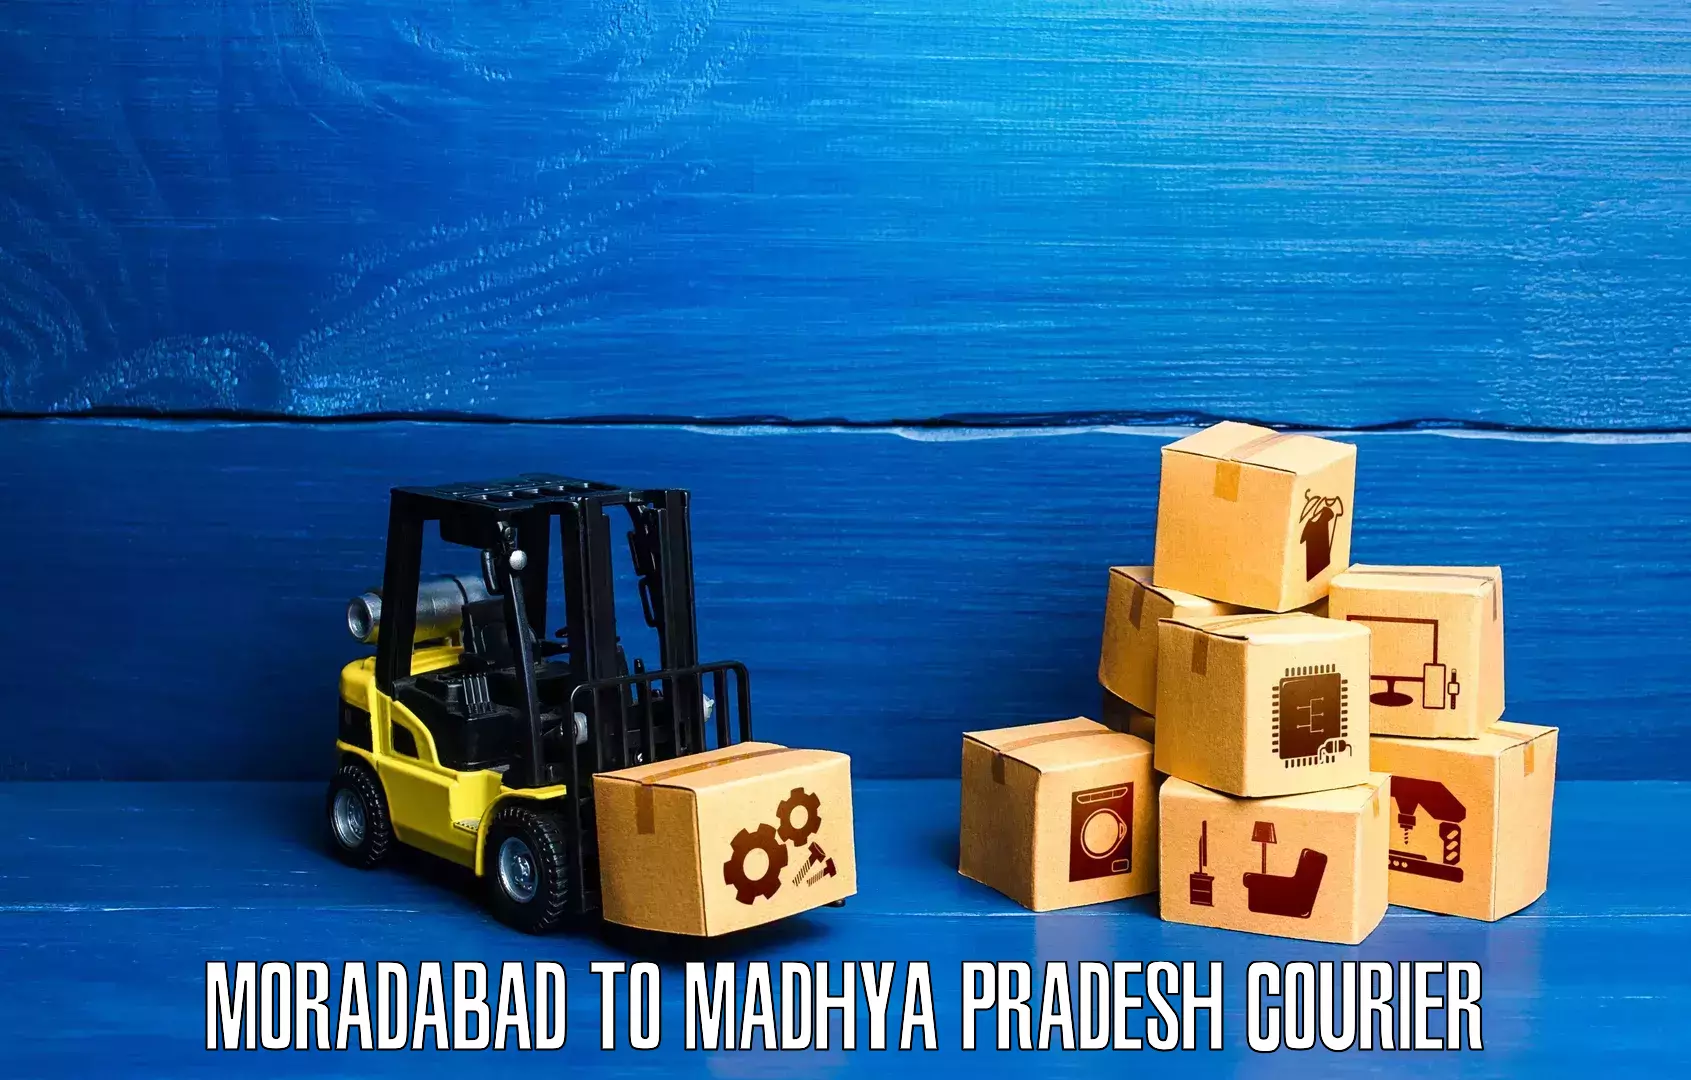 Express courier facilities Moradabad to Sendhwa